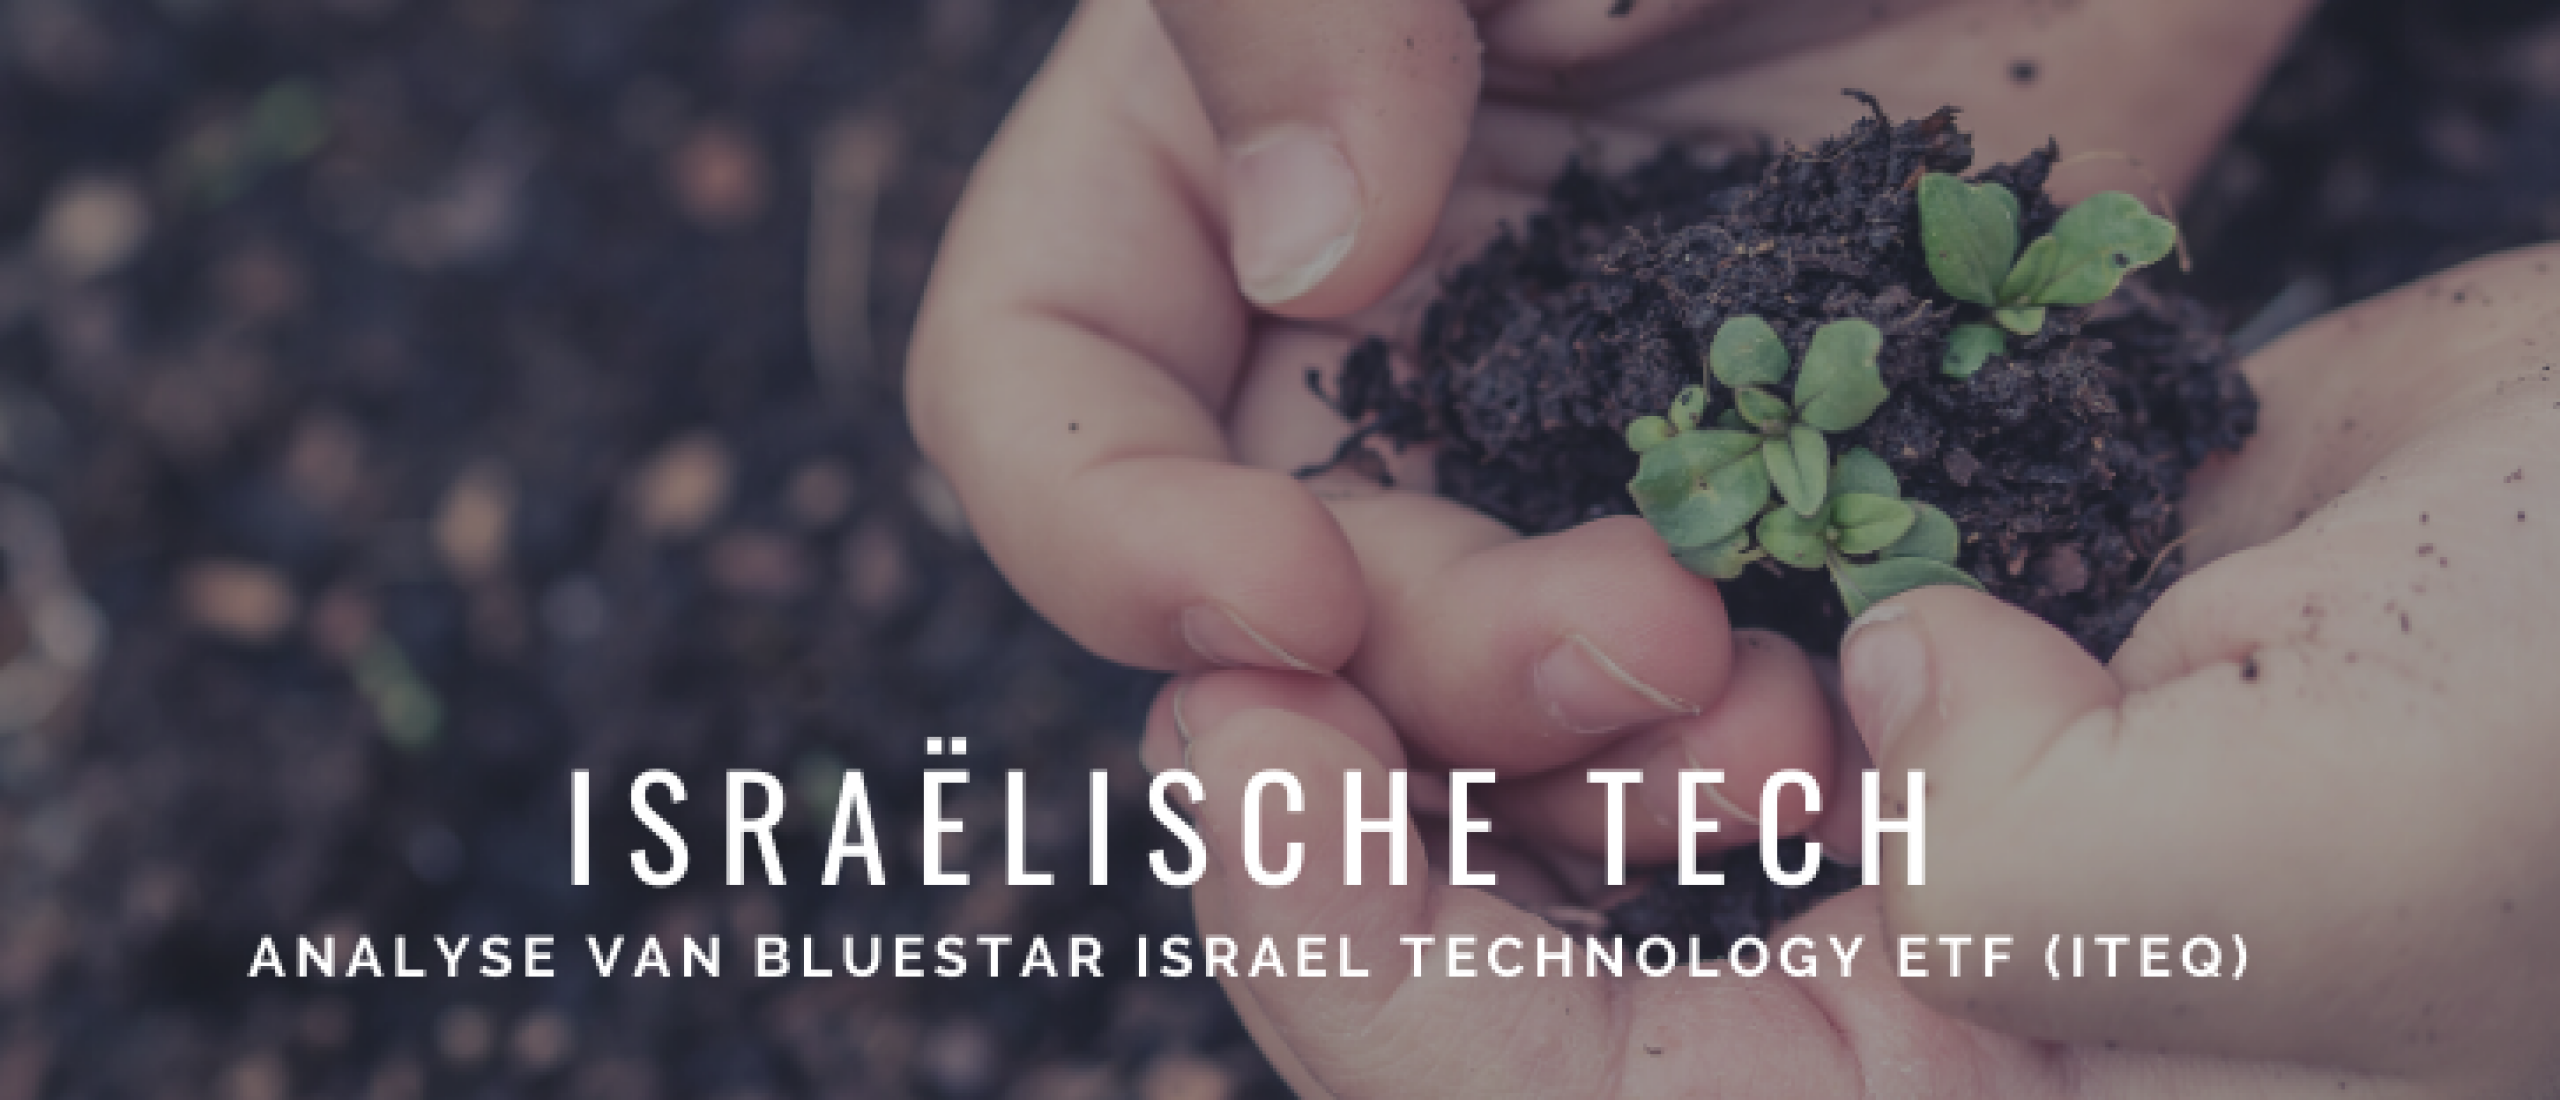 Analyse BlueStar Israel Technology ETF (ITEQ): Israëlische Tech